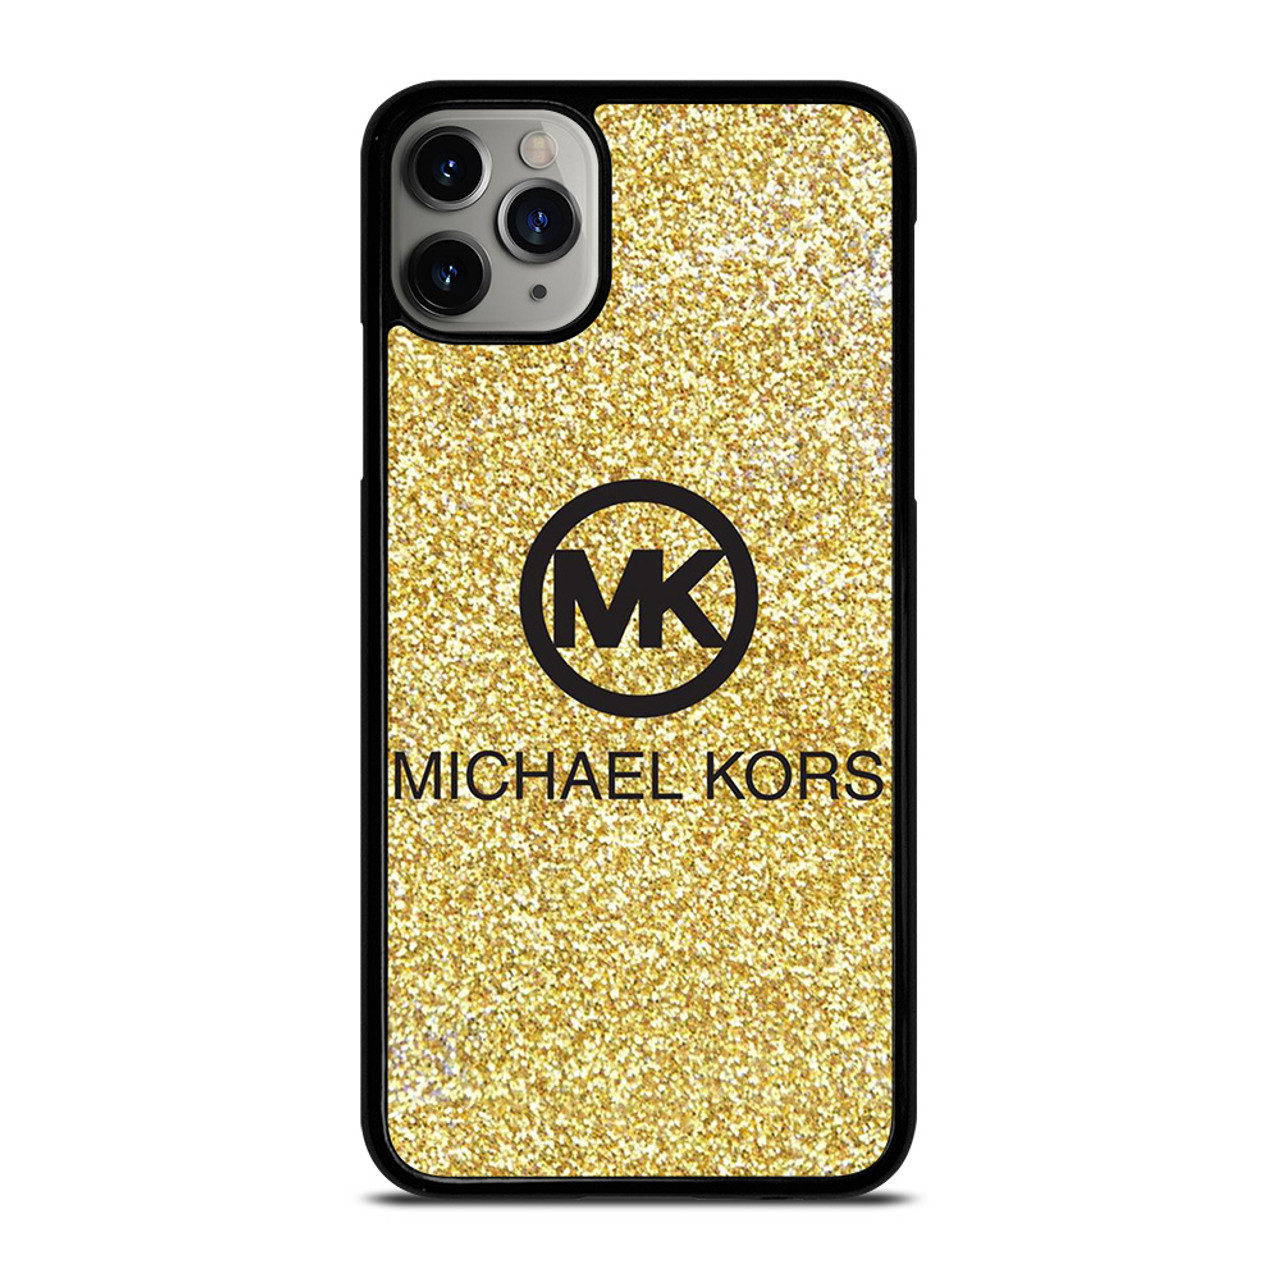 MICHAEL KORS MK GOLD LOGO ICON 11 Pro Max Case Cover